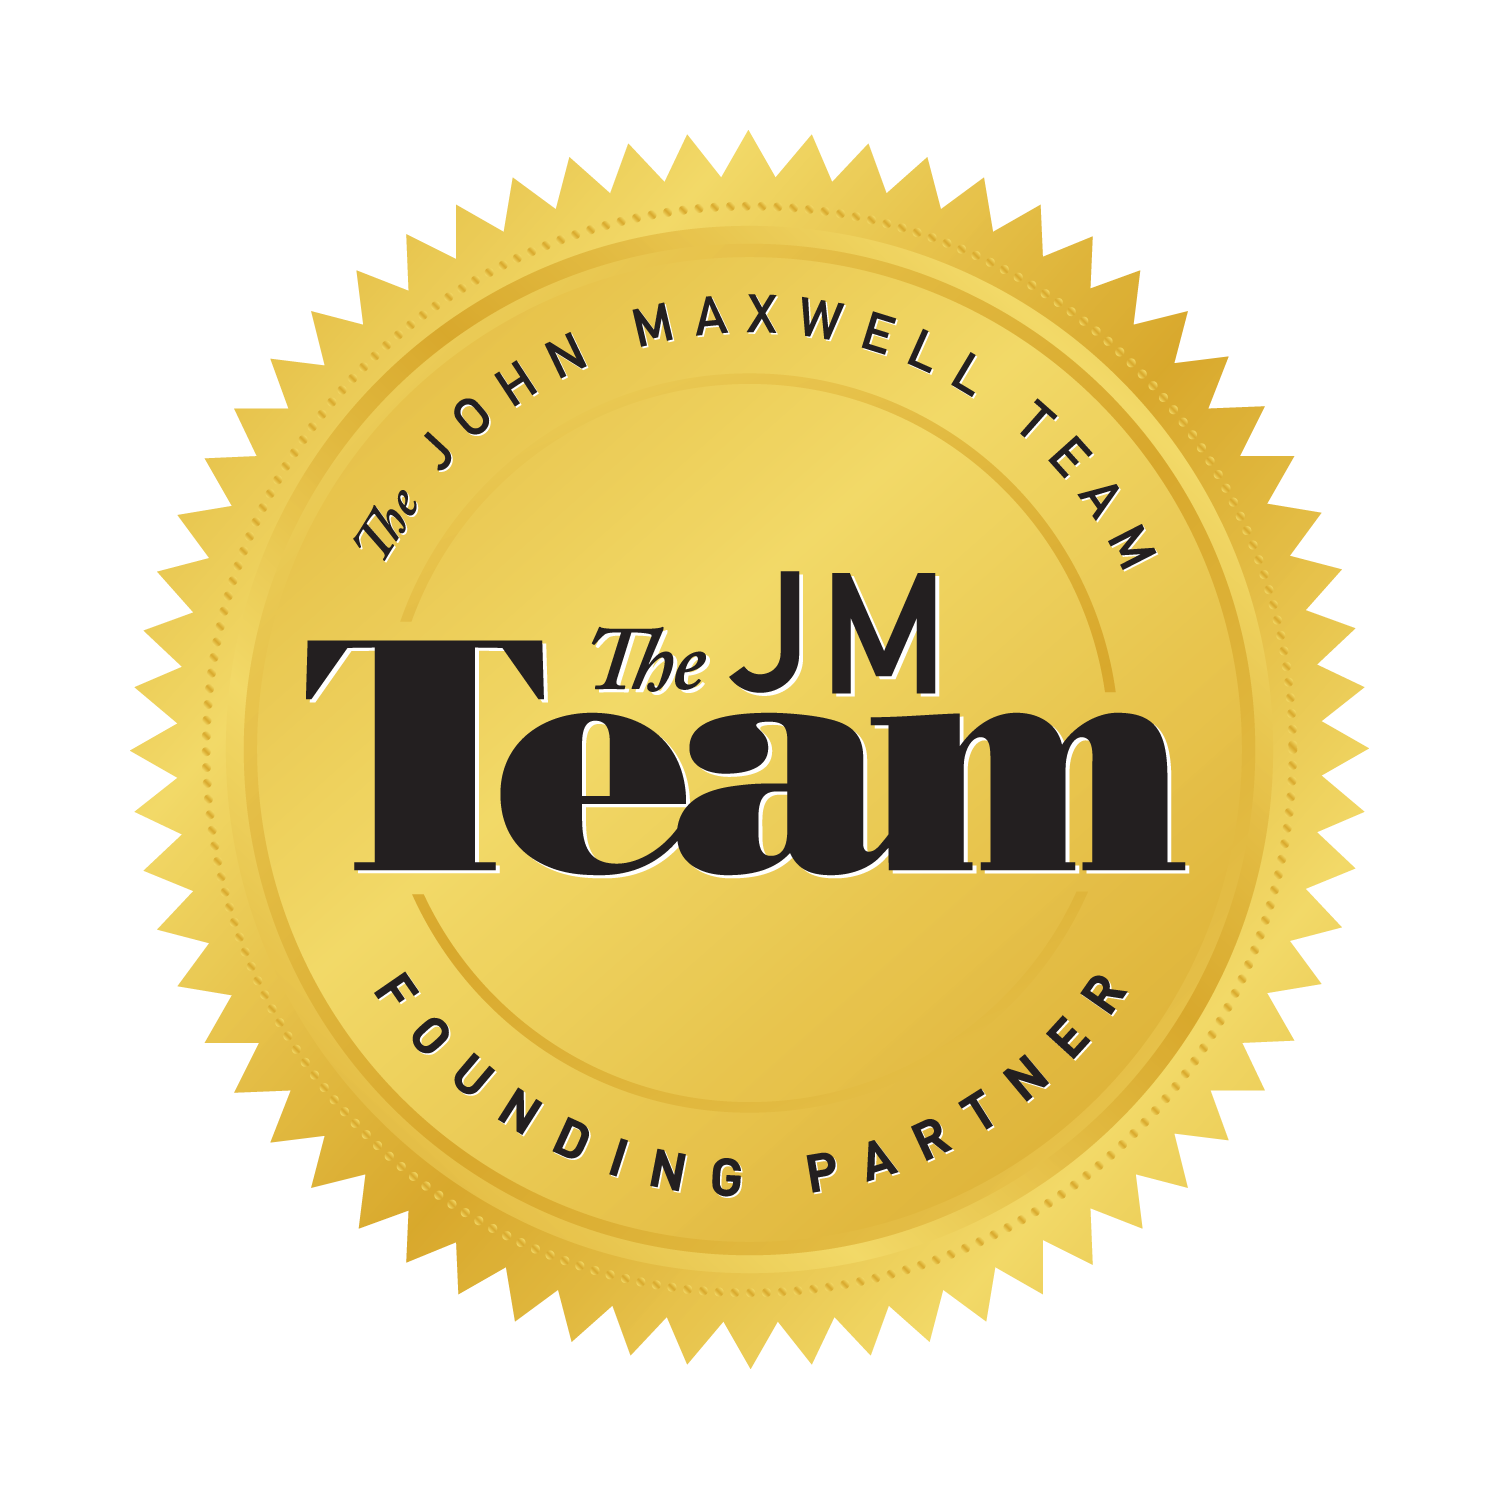 John Maxwell Team - Founding Partner Seal